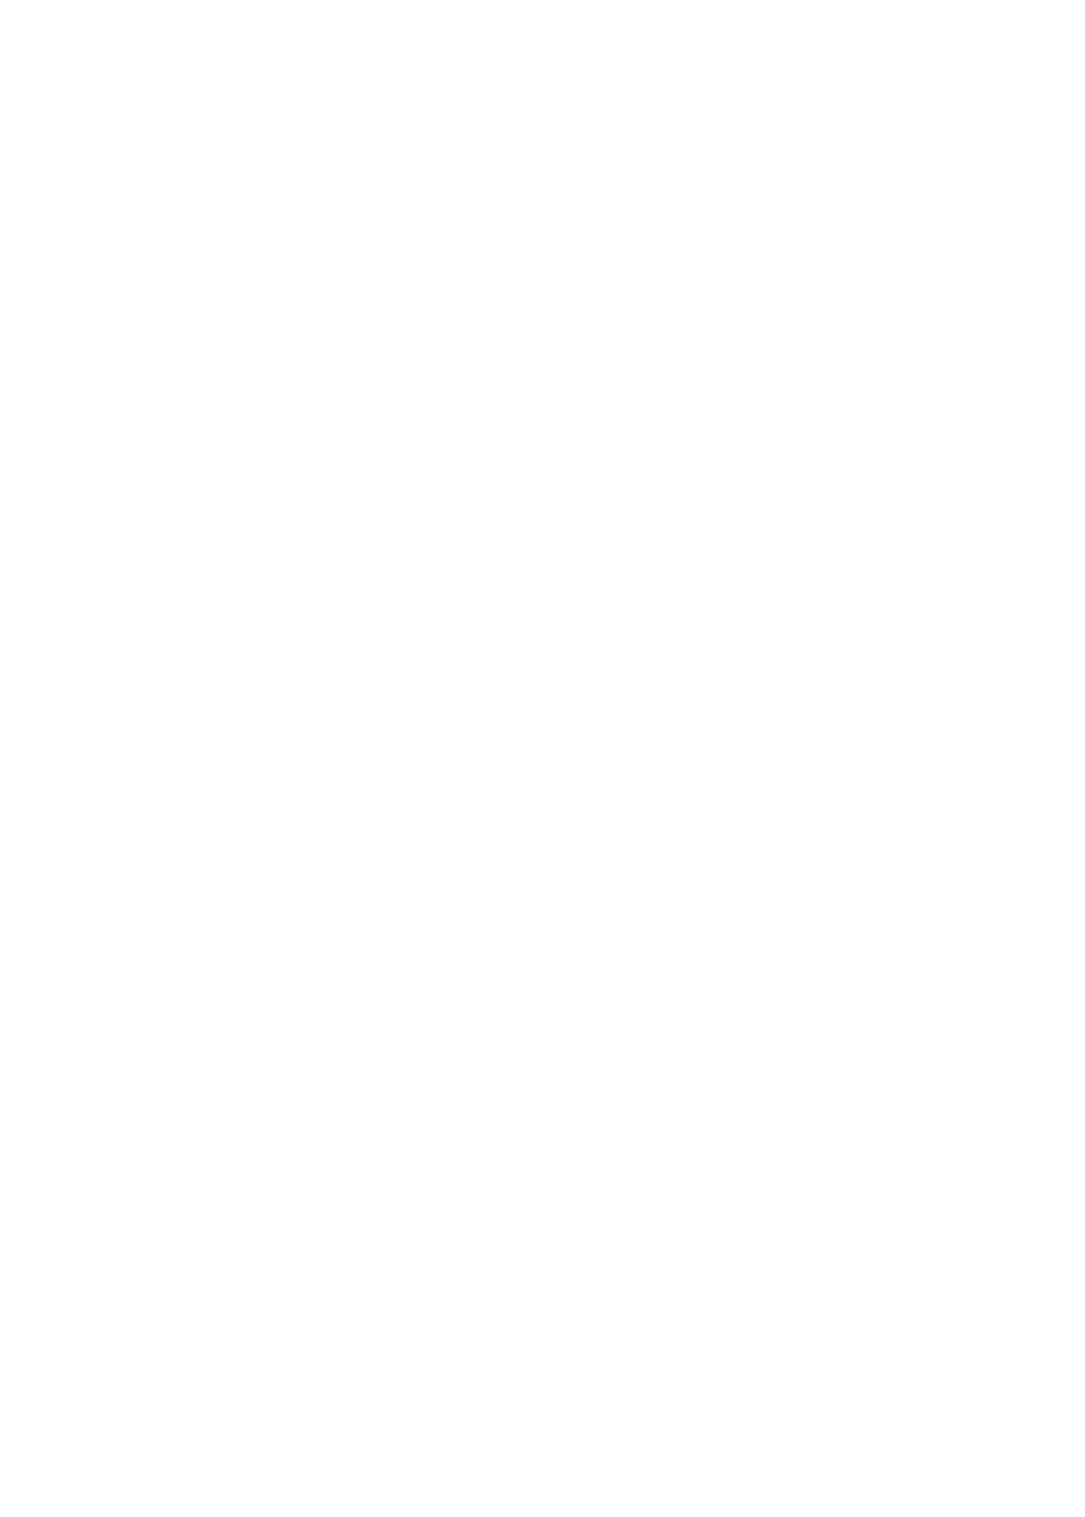 Spire Energy logo for dark backgrounds (transparent PNG)